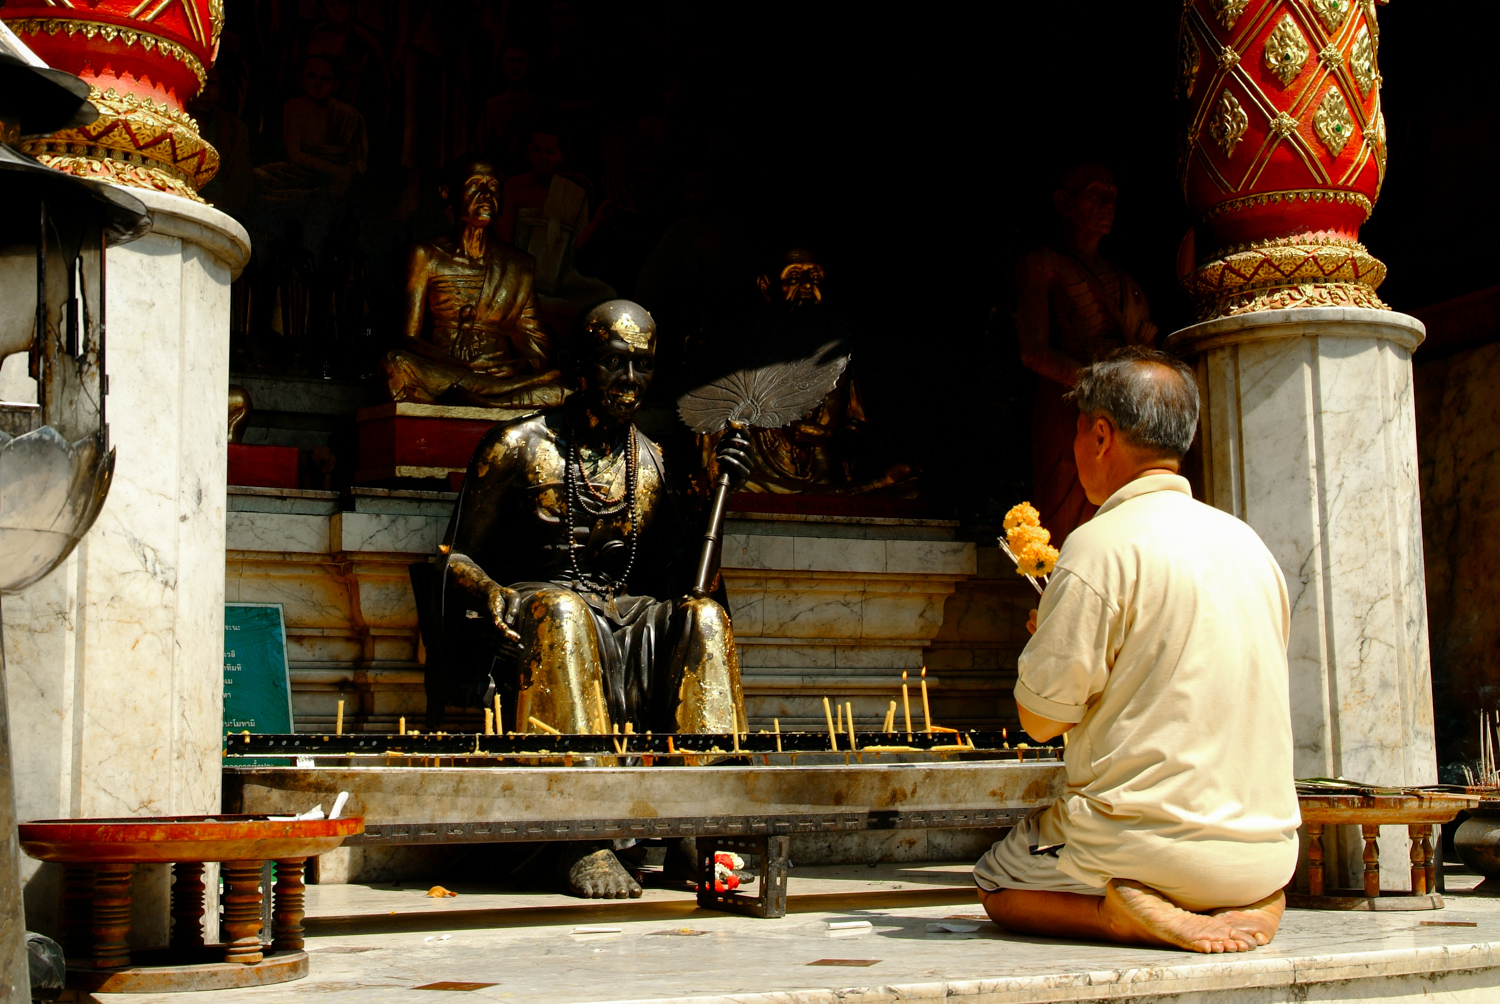 Praying at a buddhist temple